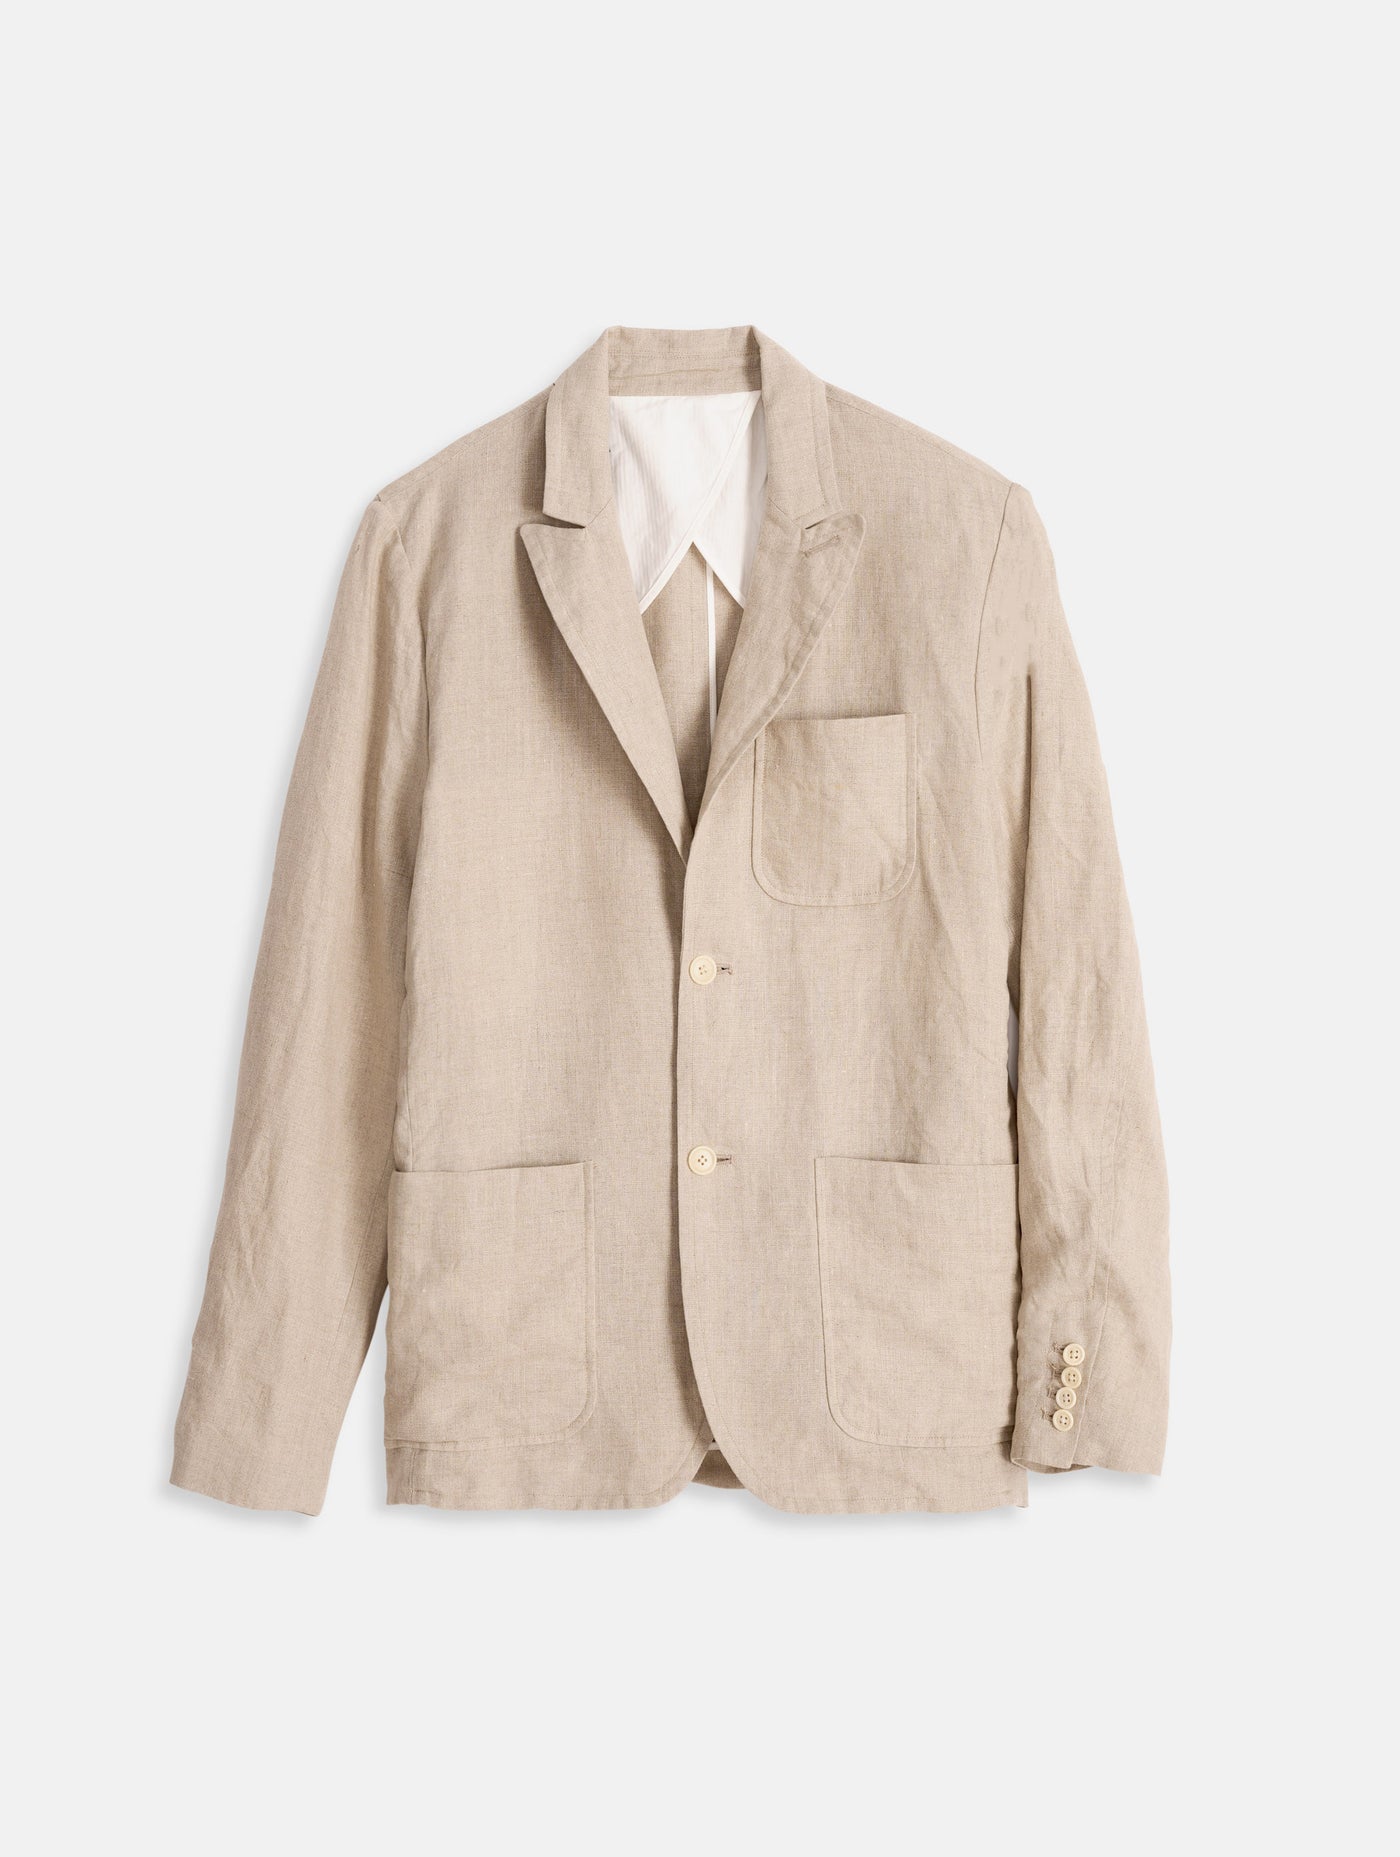 Long Linen Jacket, Custom-Made Women's Flax Clothing